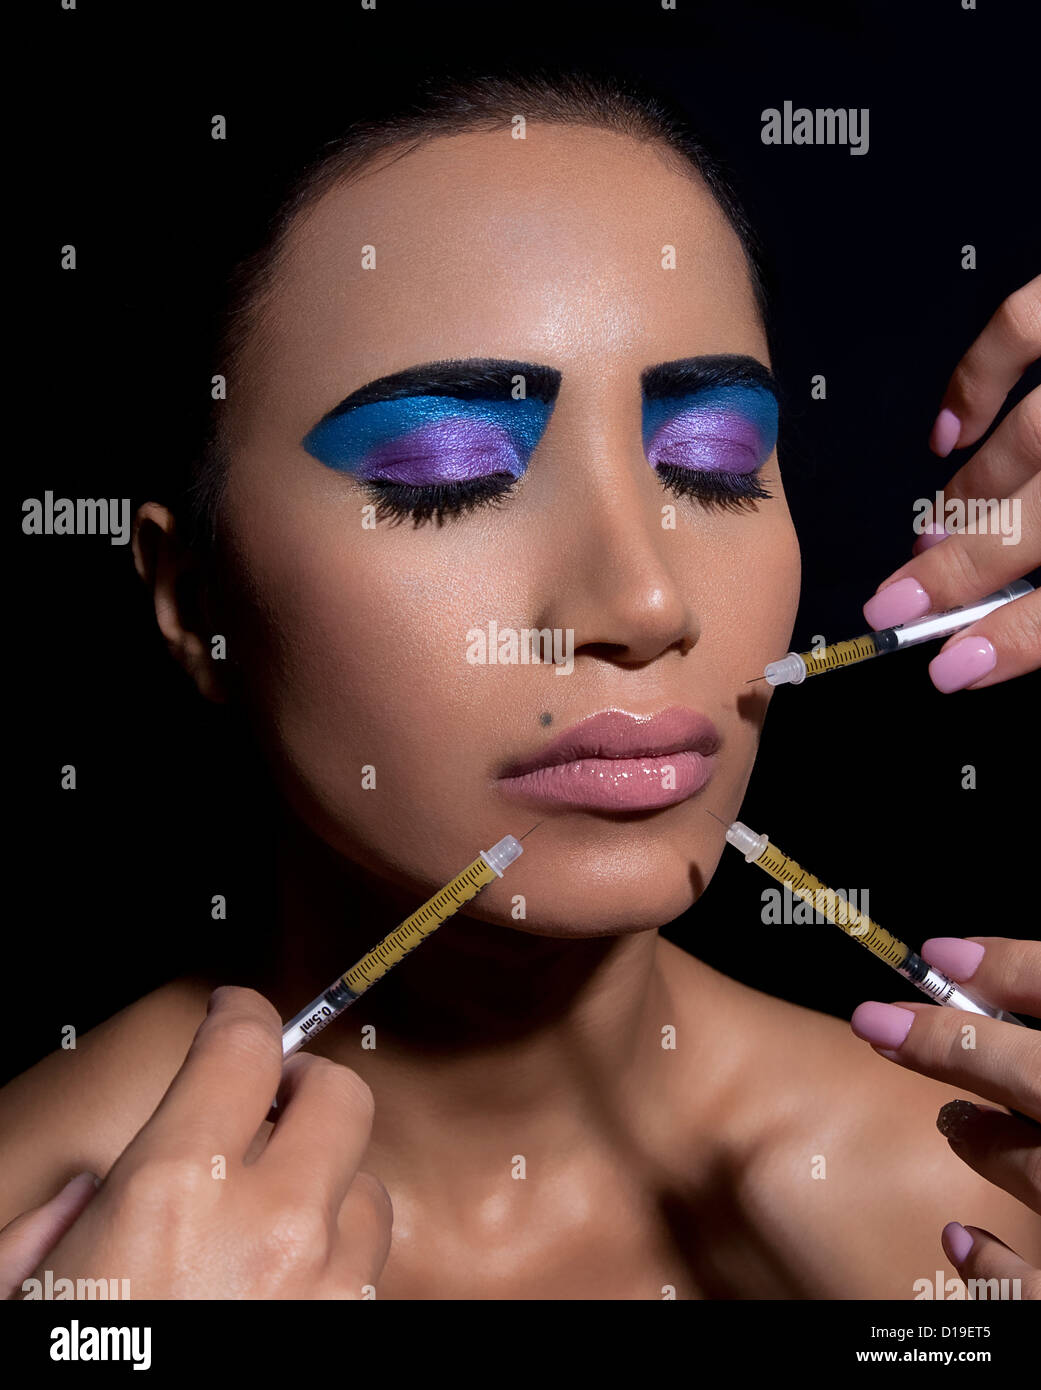 Woman with dramatic eye makeup, having neurotoxin injections Stock Photo